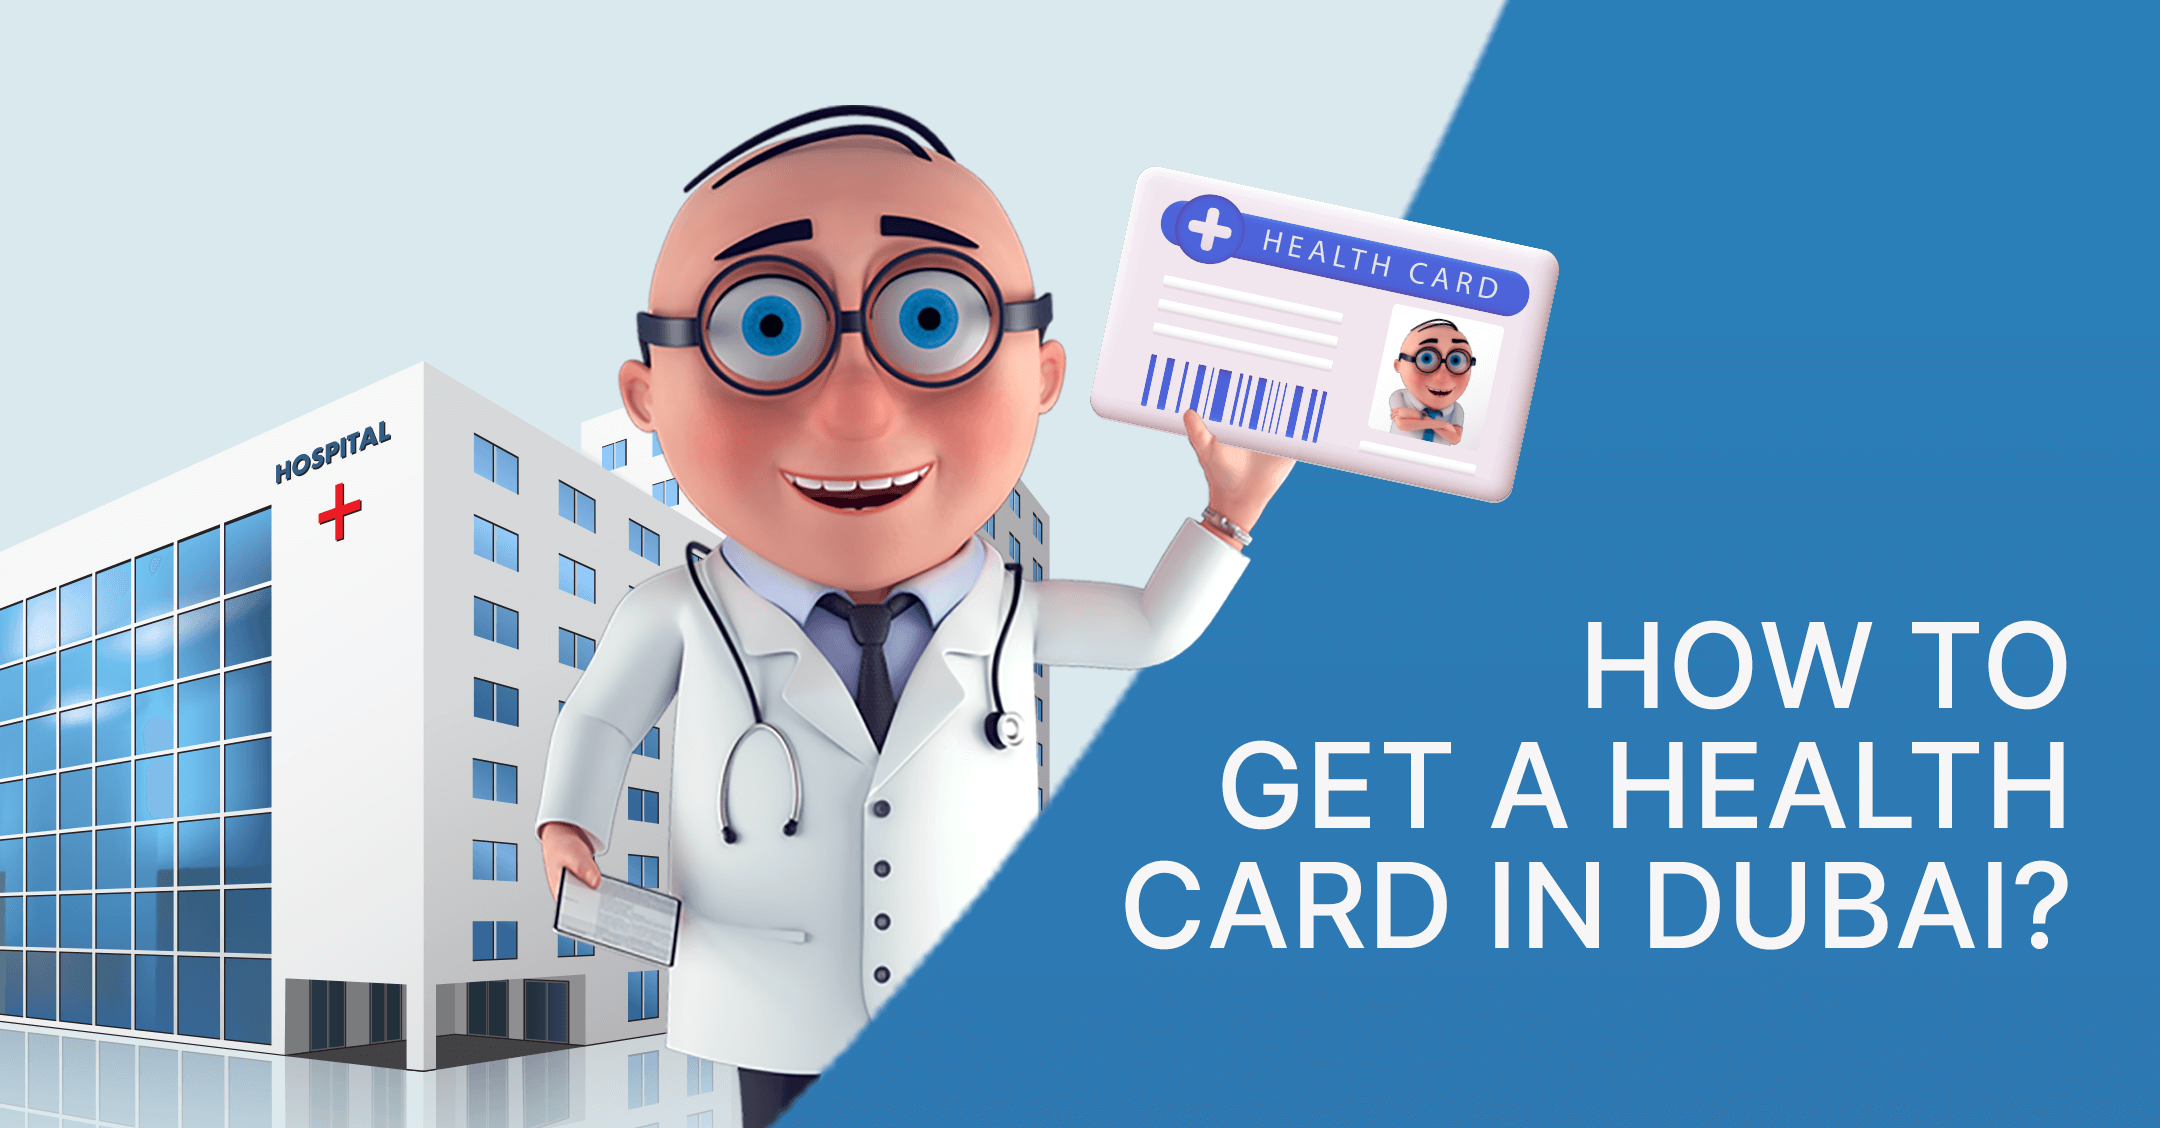 Health card in Dubai